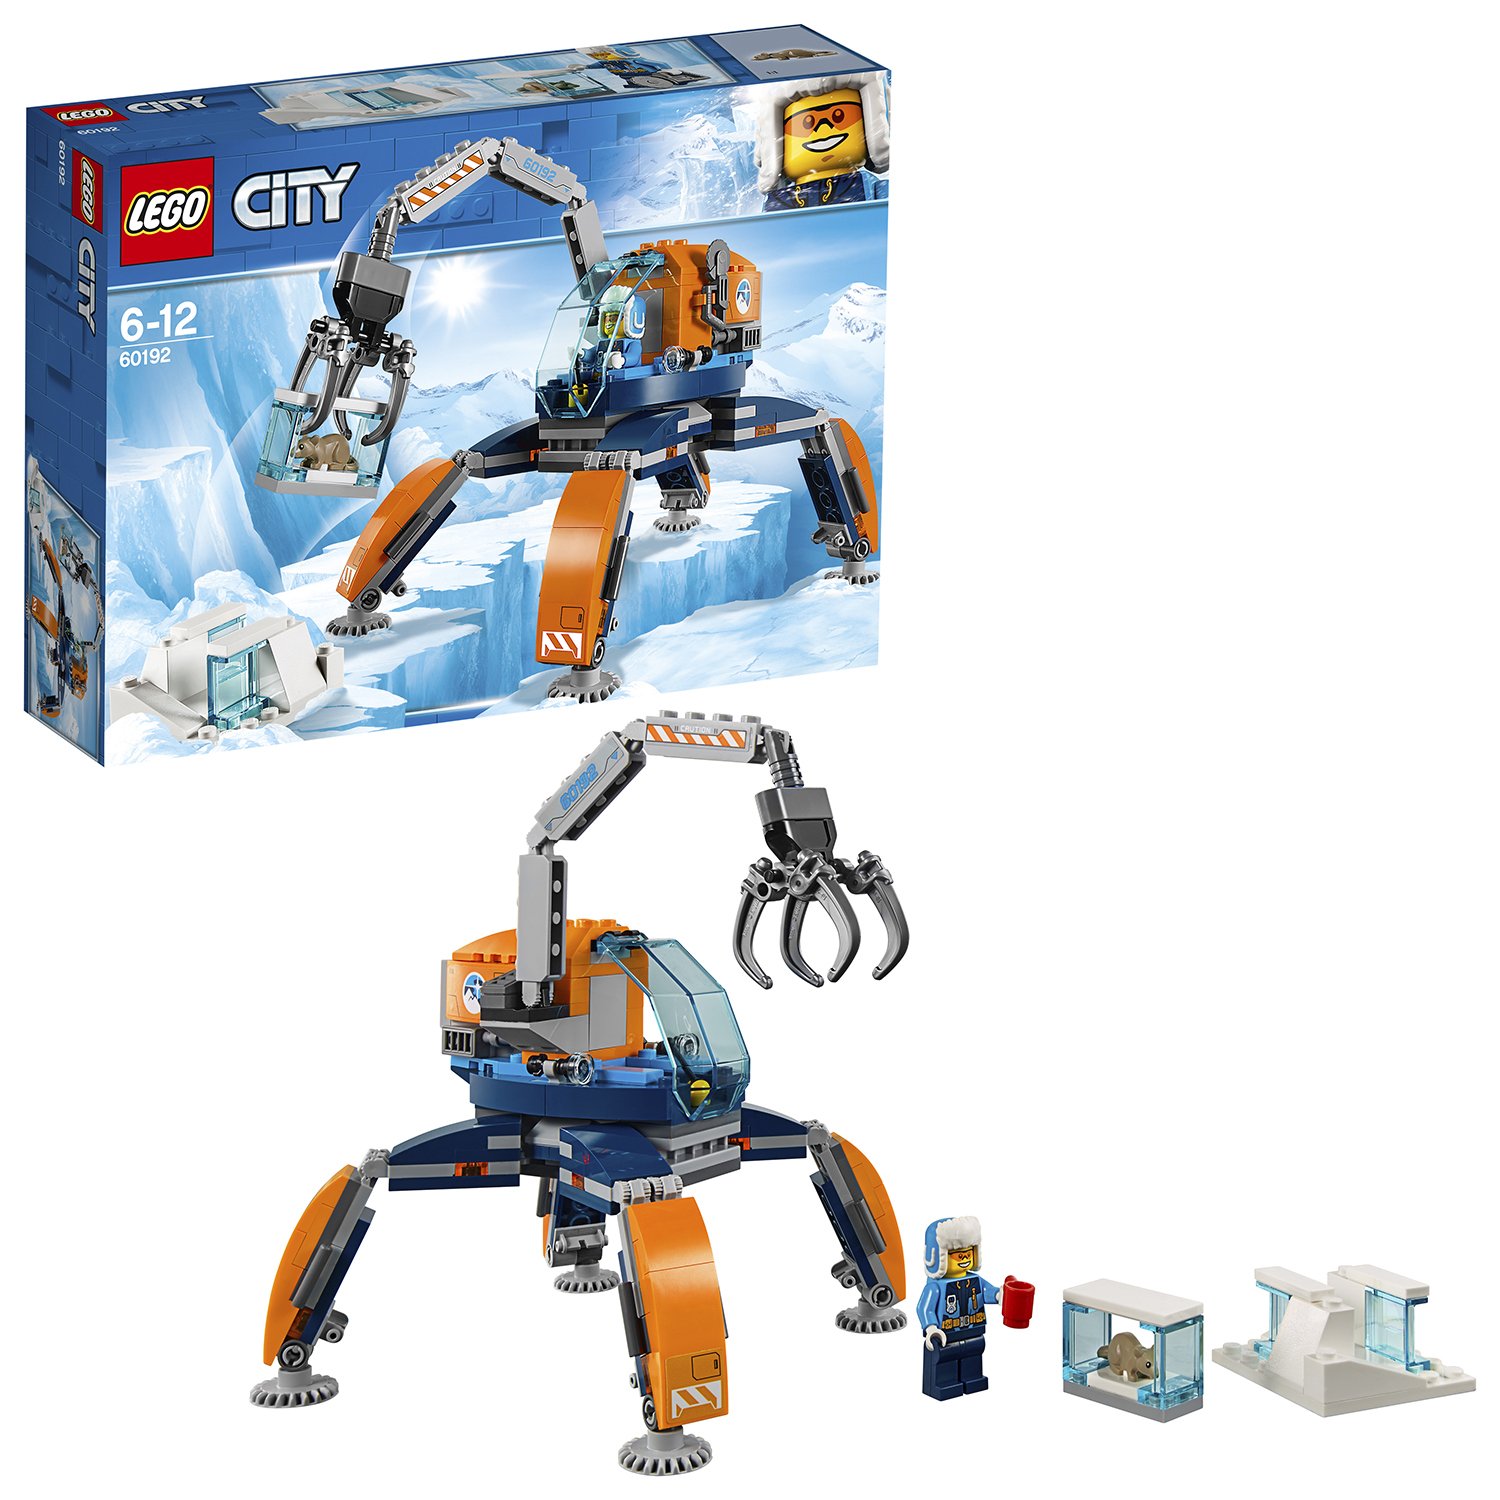 LEGO City Arctic Expedition Ice Crawler Winter Toy - 60192